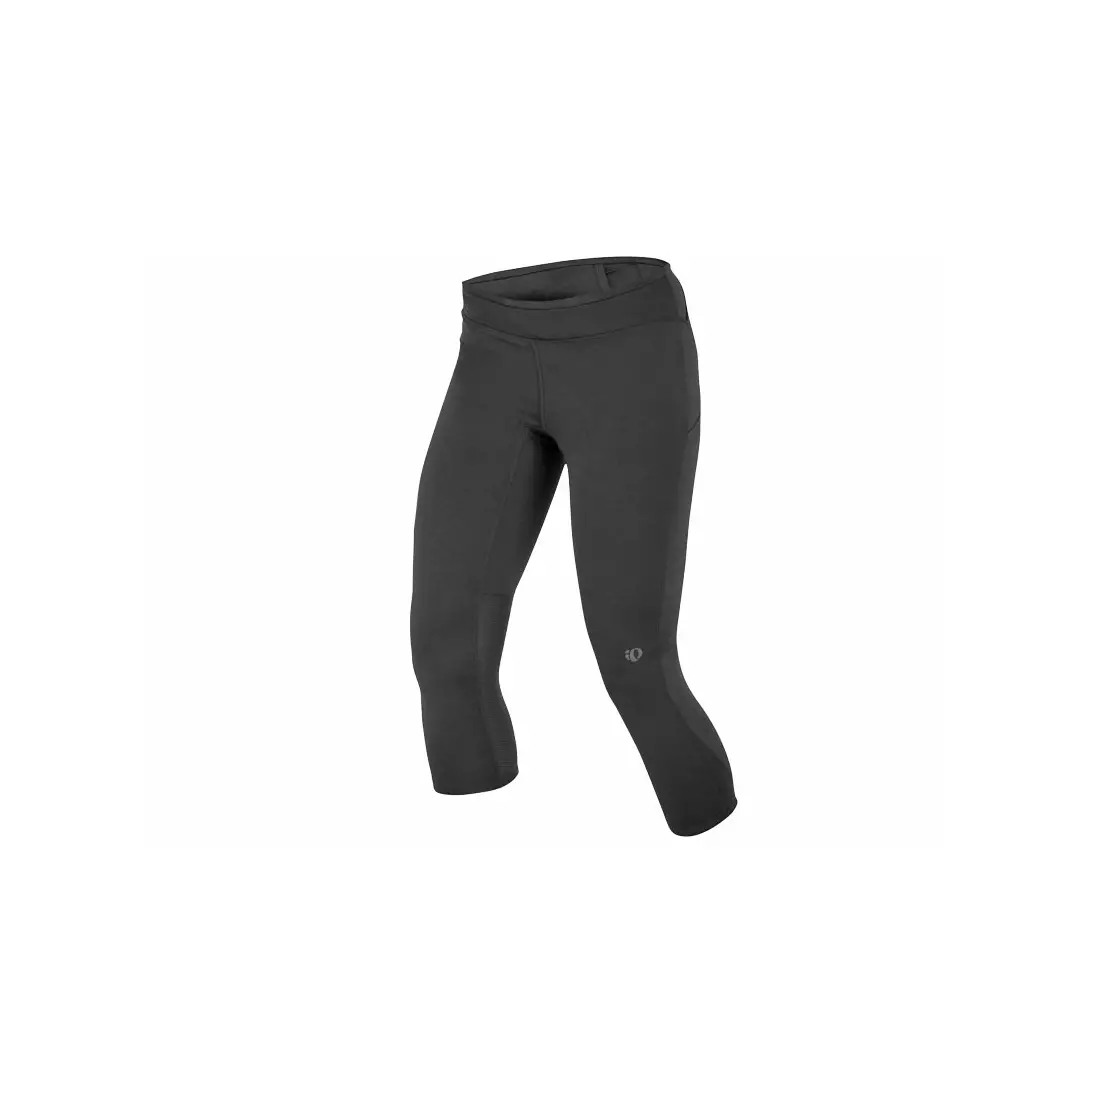 PEARL IZUMI RUN dámské běžecké šortky 3/4 ULTRA 12211214-021, barva: černá